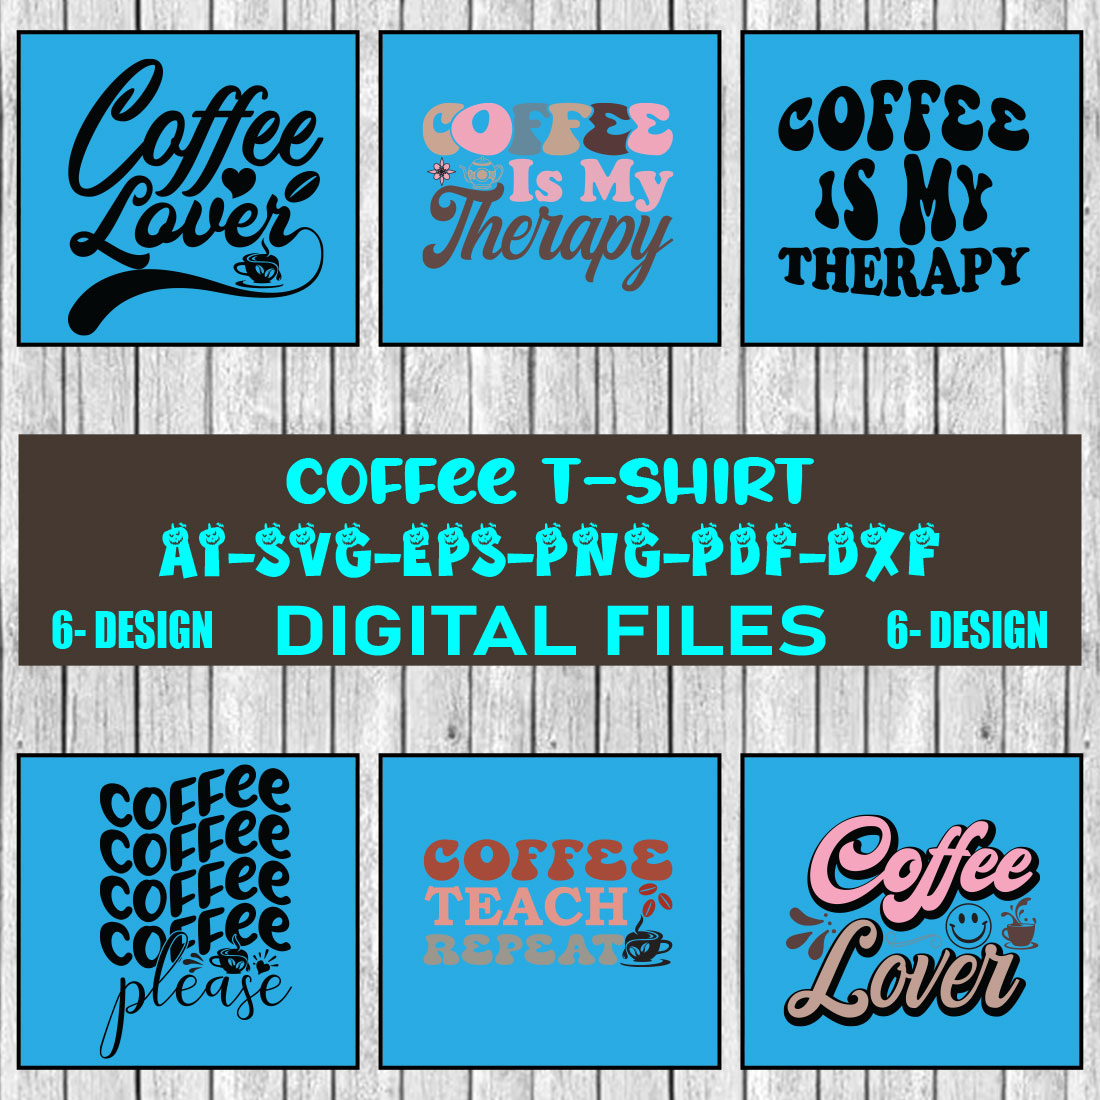 Coffee T-shirt Design Bundle Vol-3 cover image.